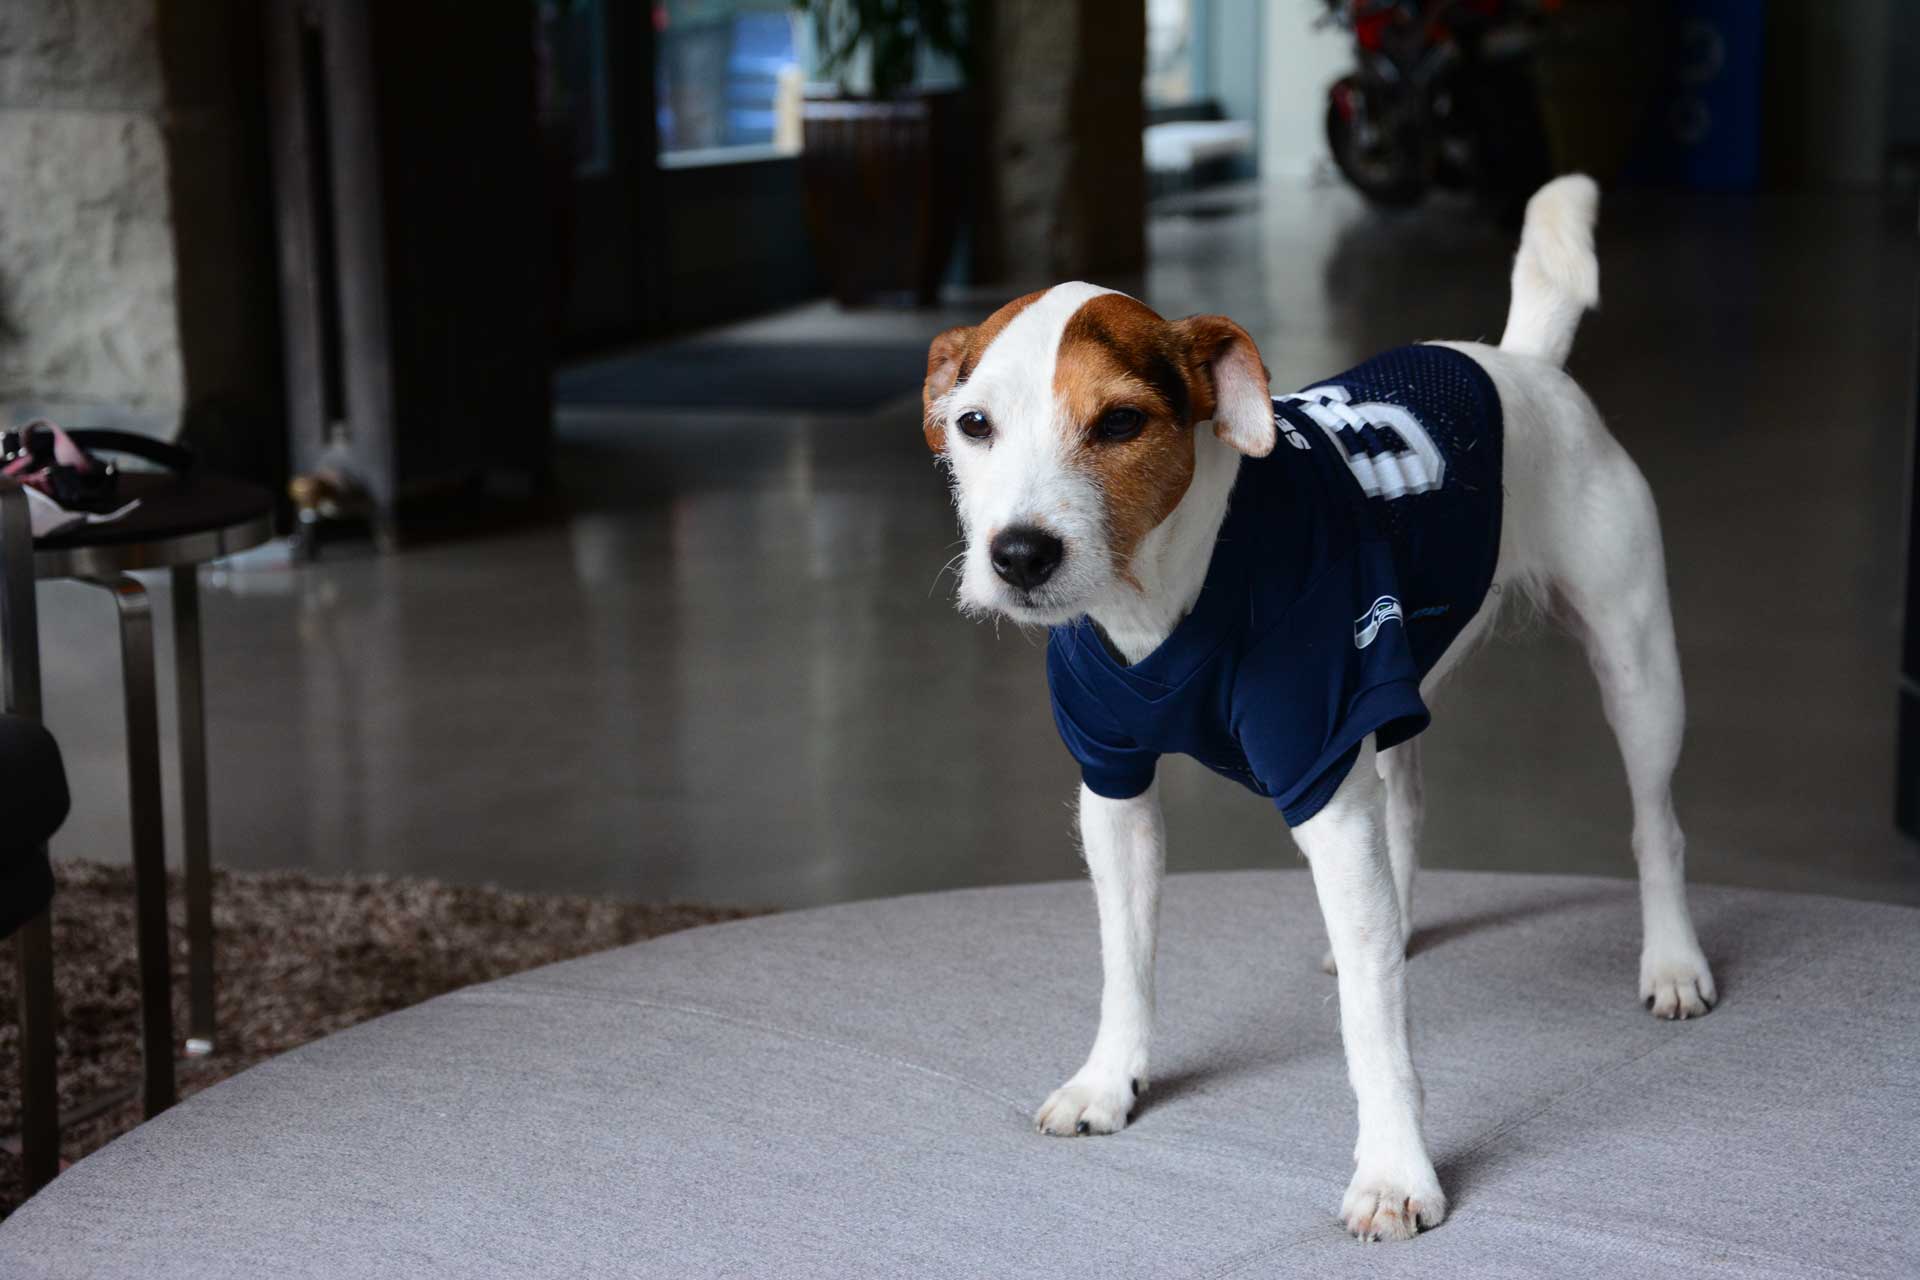 Jack Russell Terrier in a Seahawks jersey.